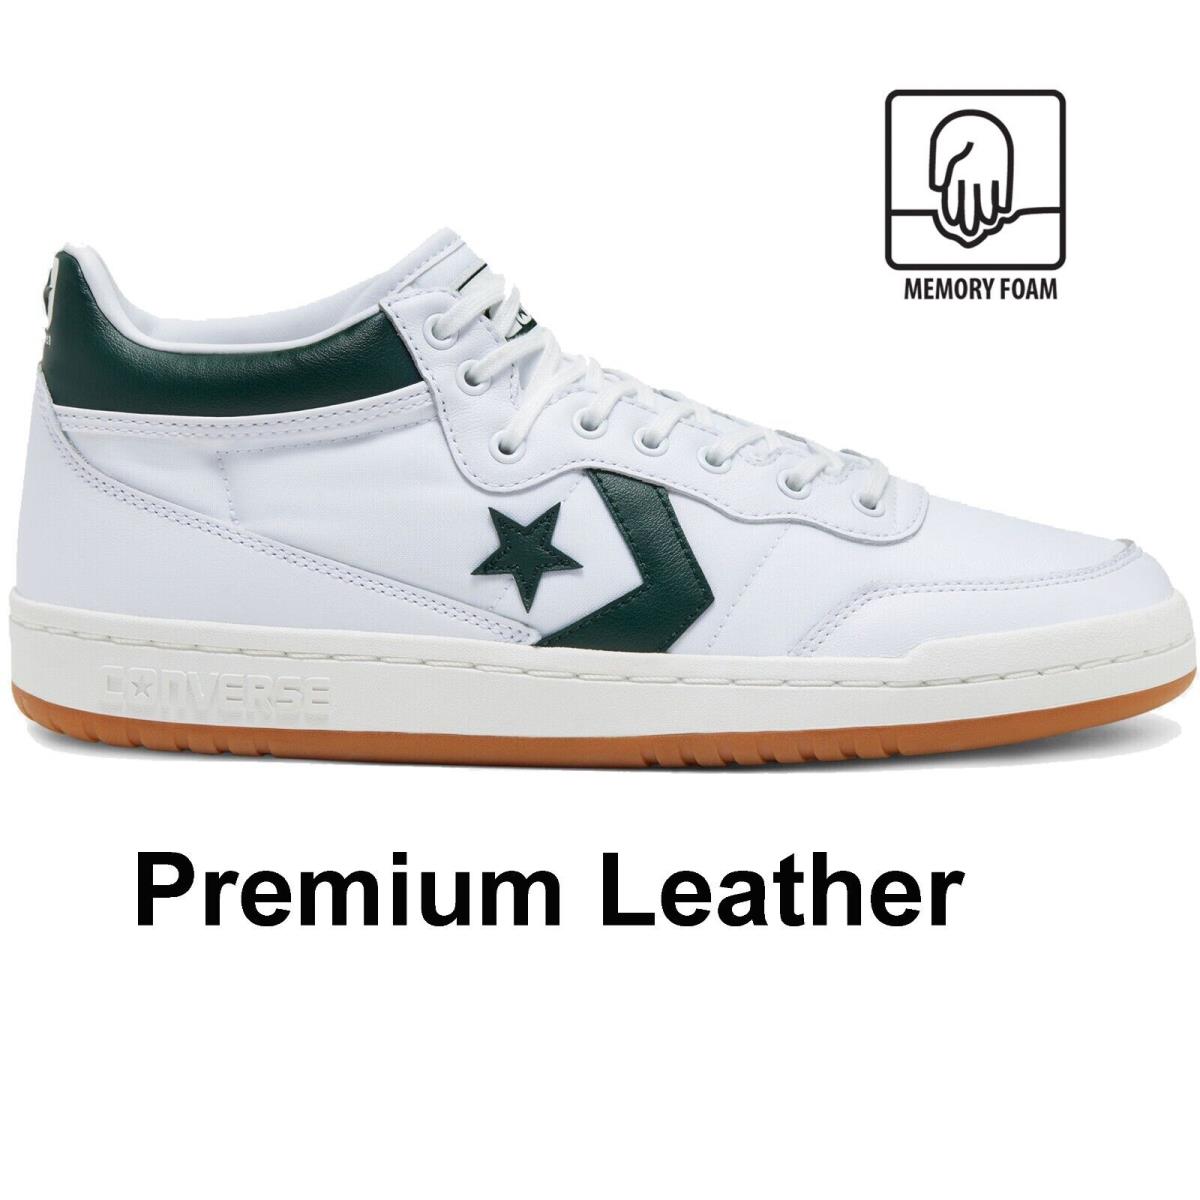 Converse Men`s Cons Fastbreak Pro Premium Leather Sport Sneakers Shoes Retro 83 White/Deep Emerald/Gum